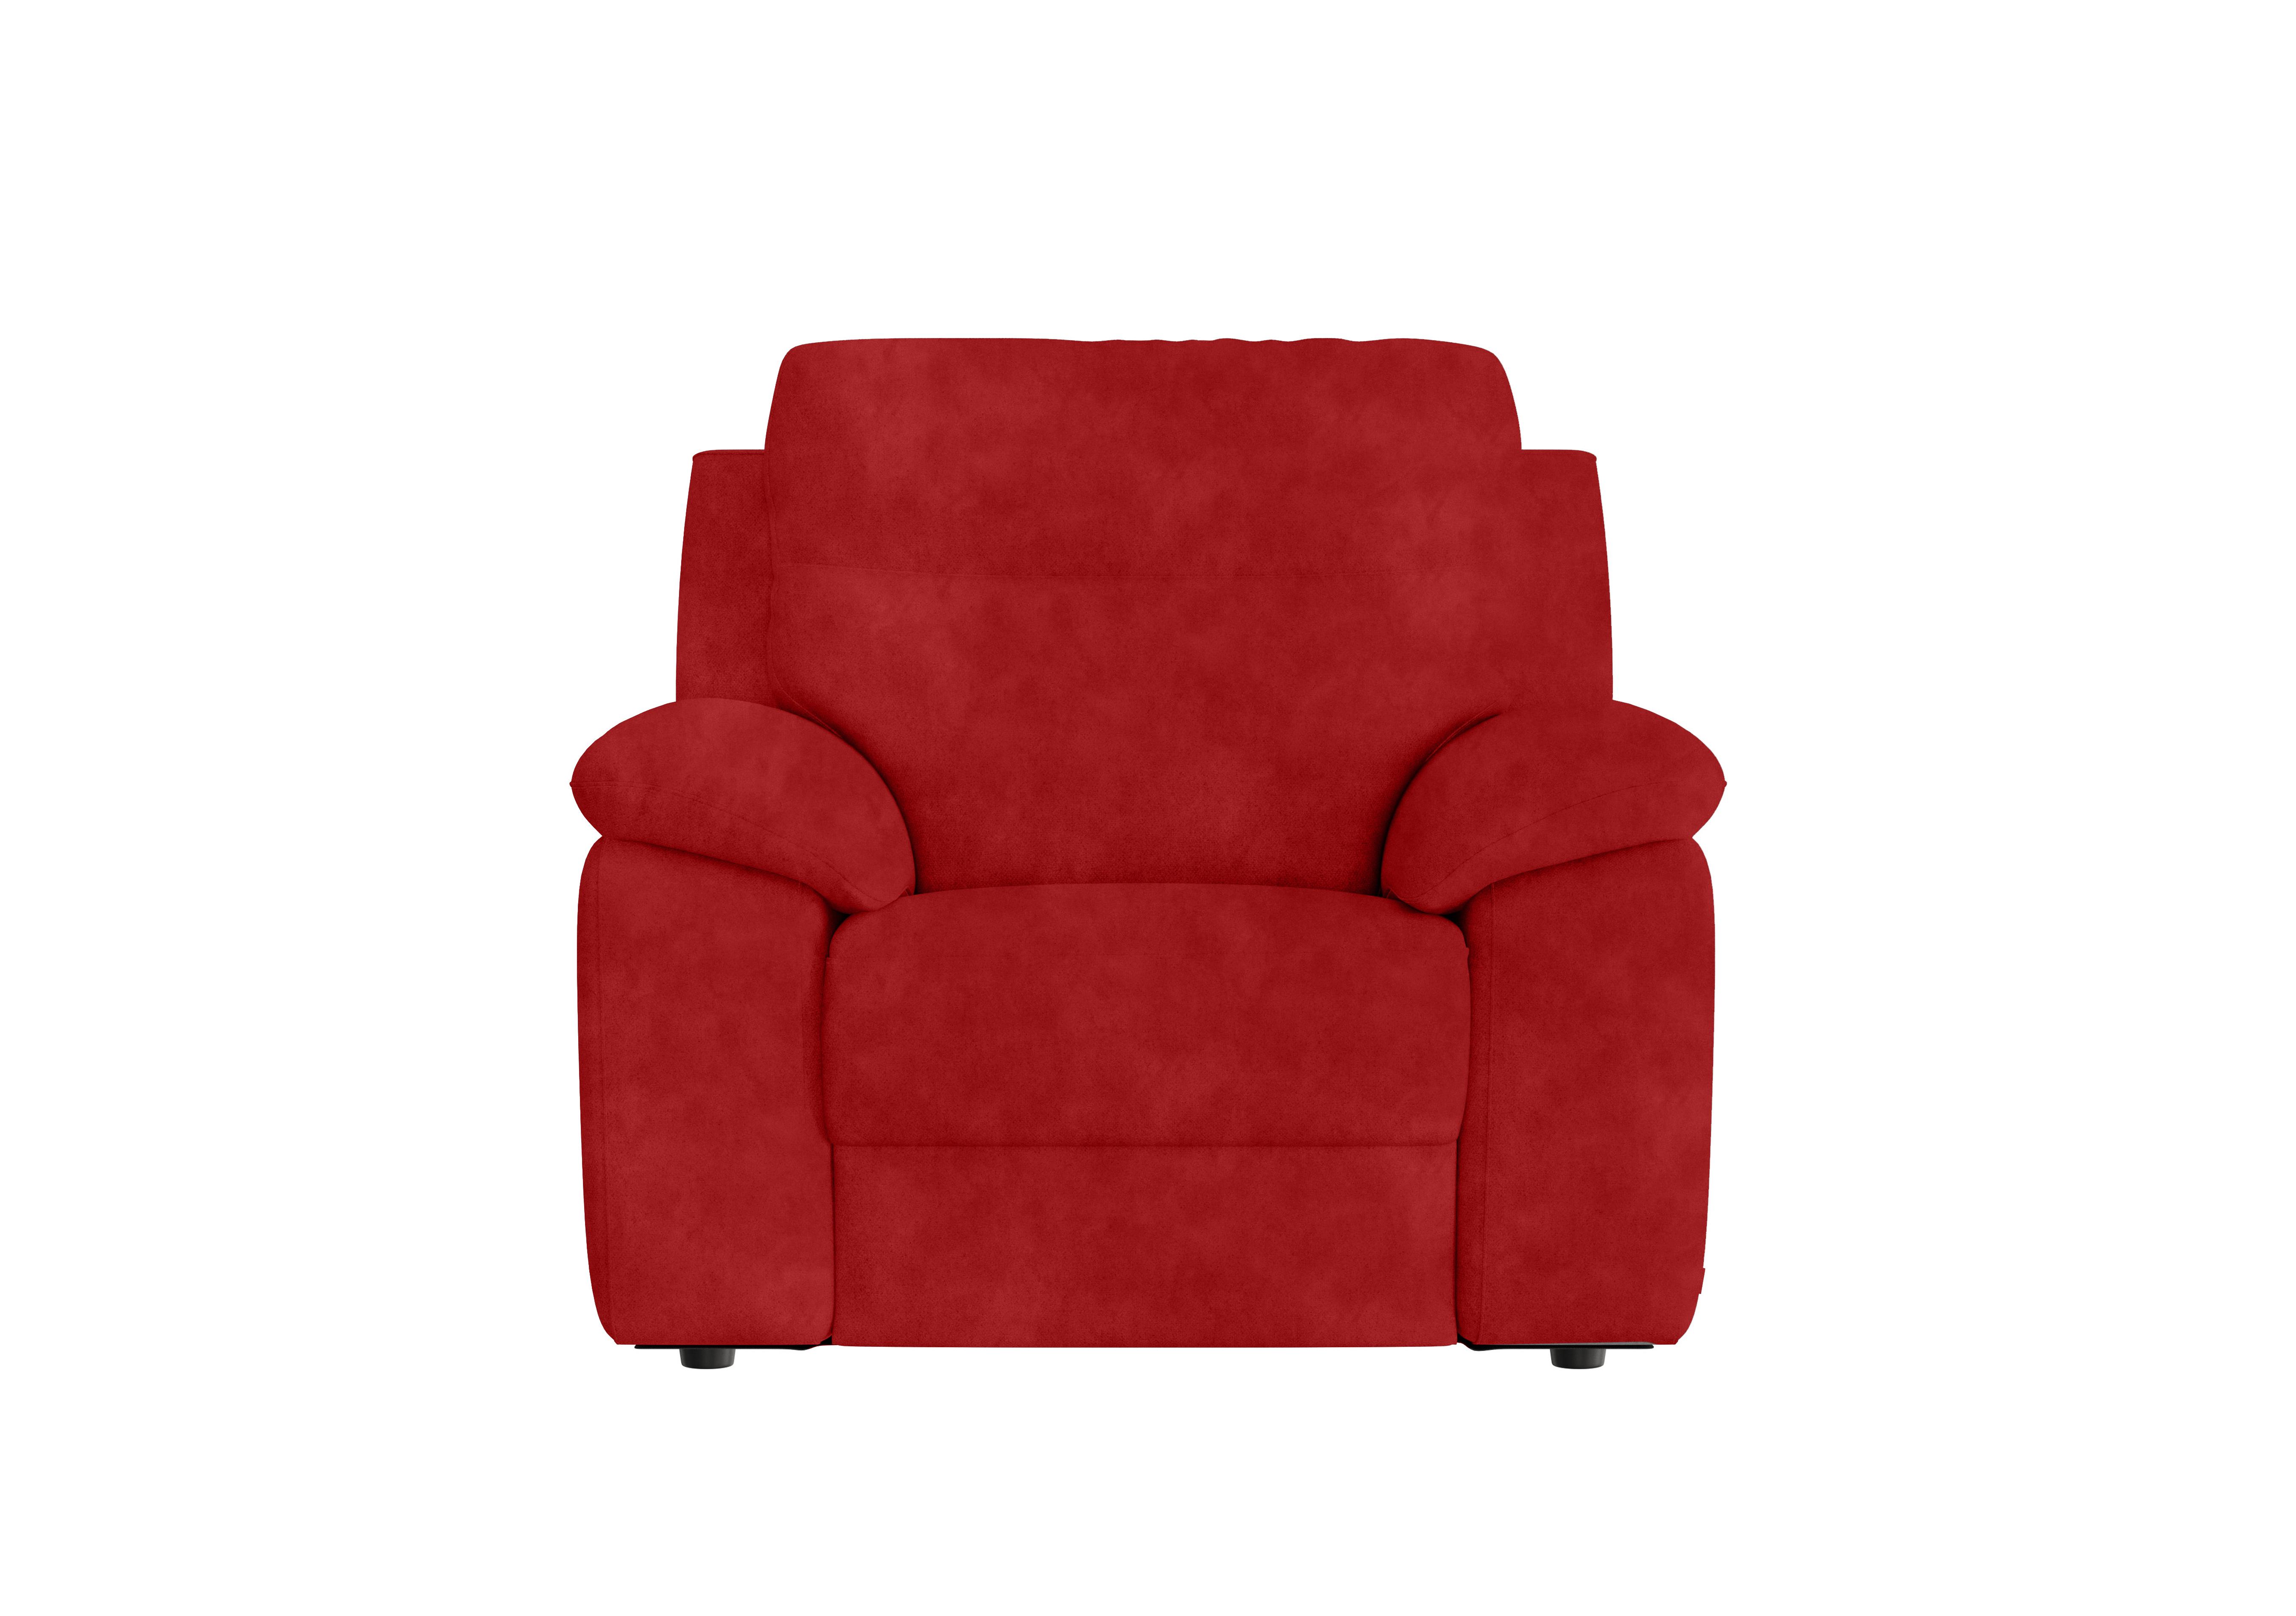 Pepino Fabric Chair in Selma Rosso on Furniture Village